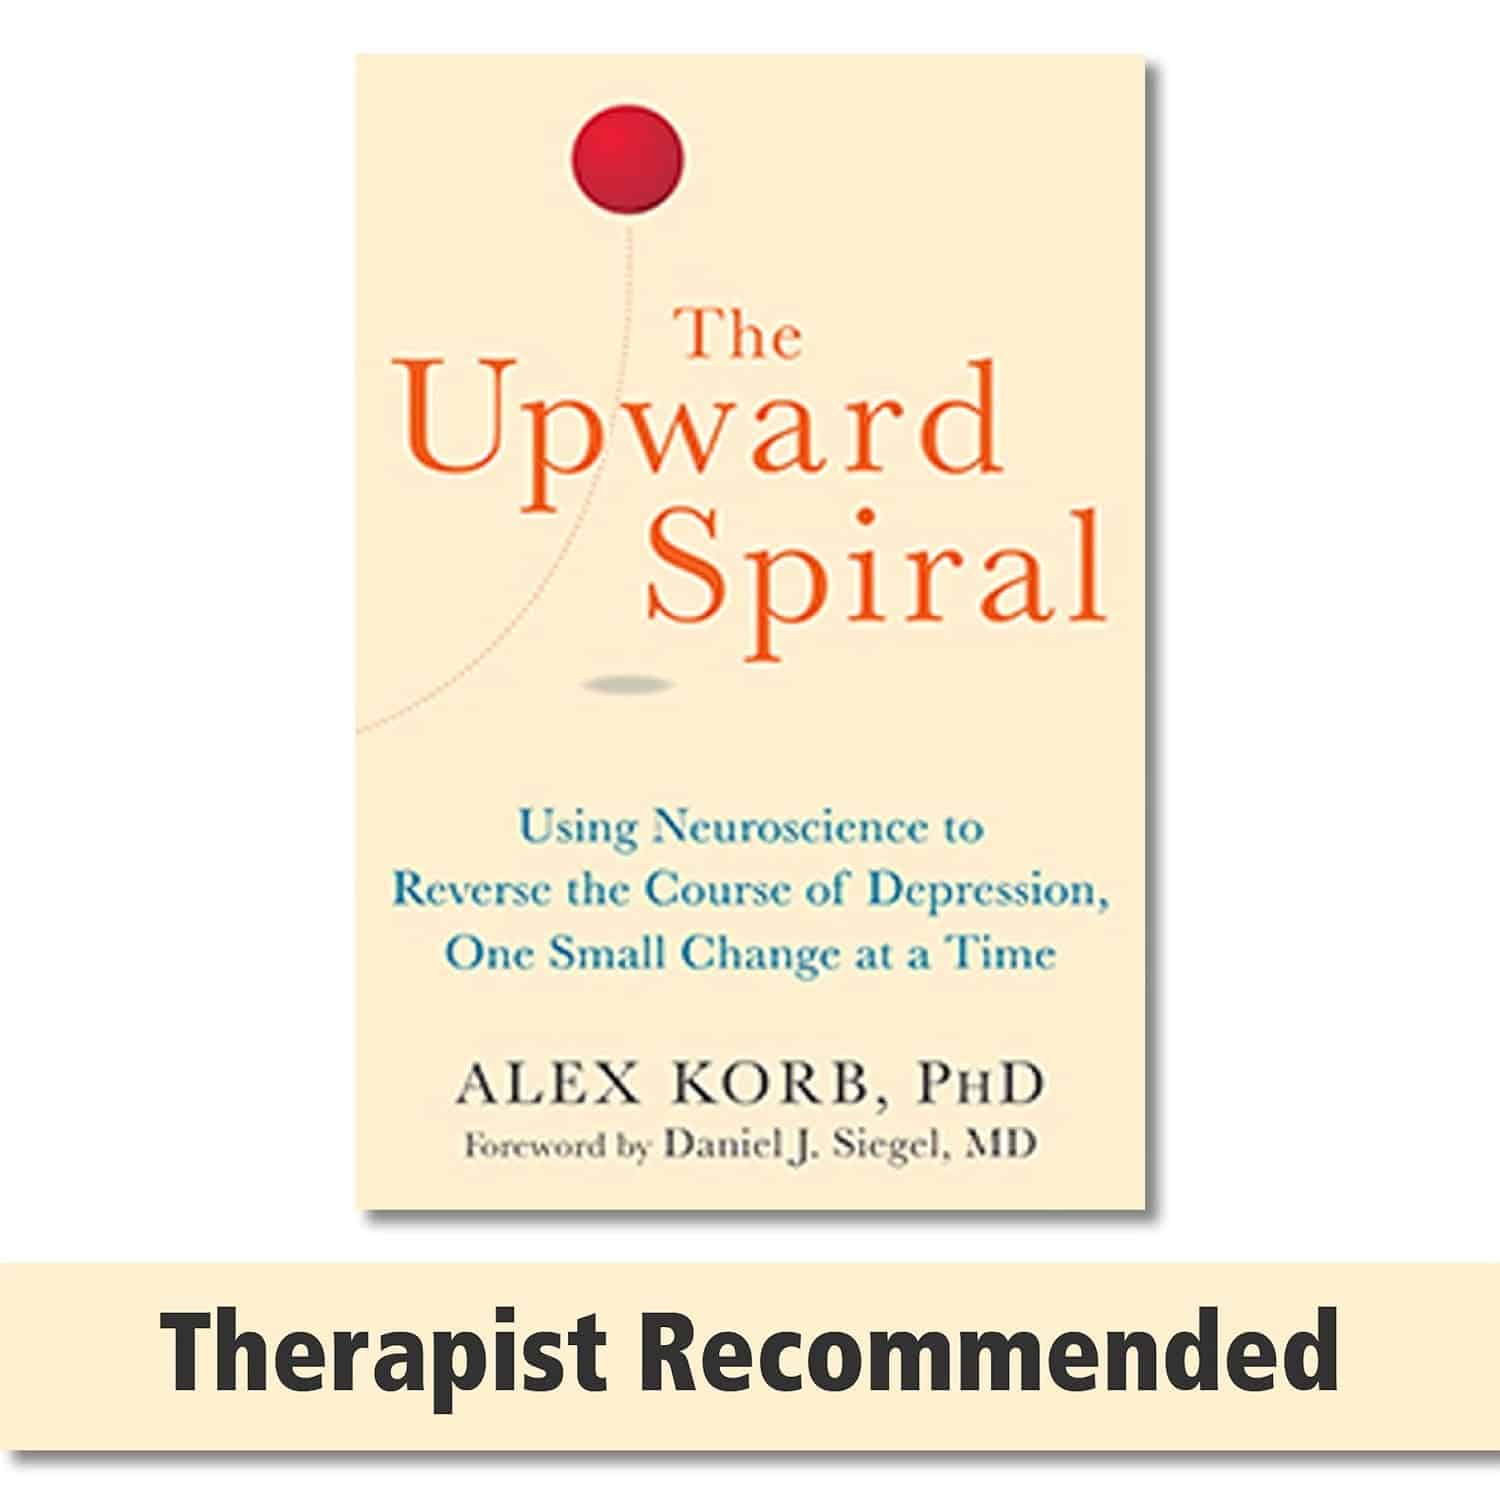 Alex Korb, PhD The Upward Spiral